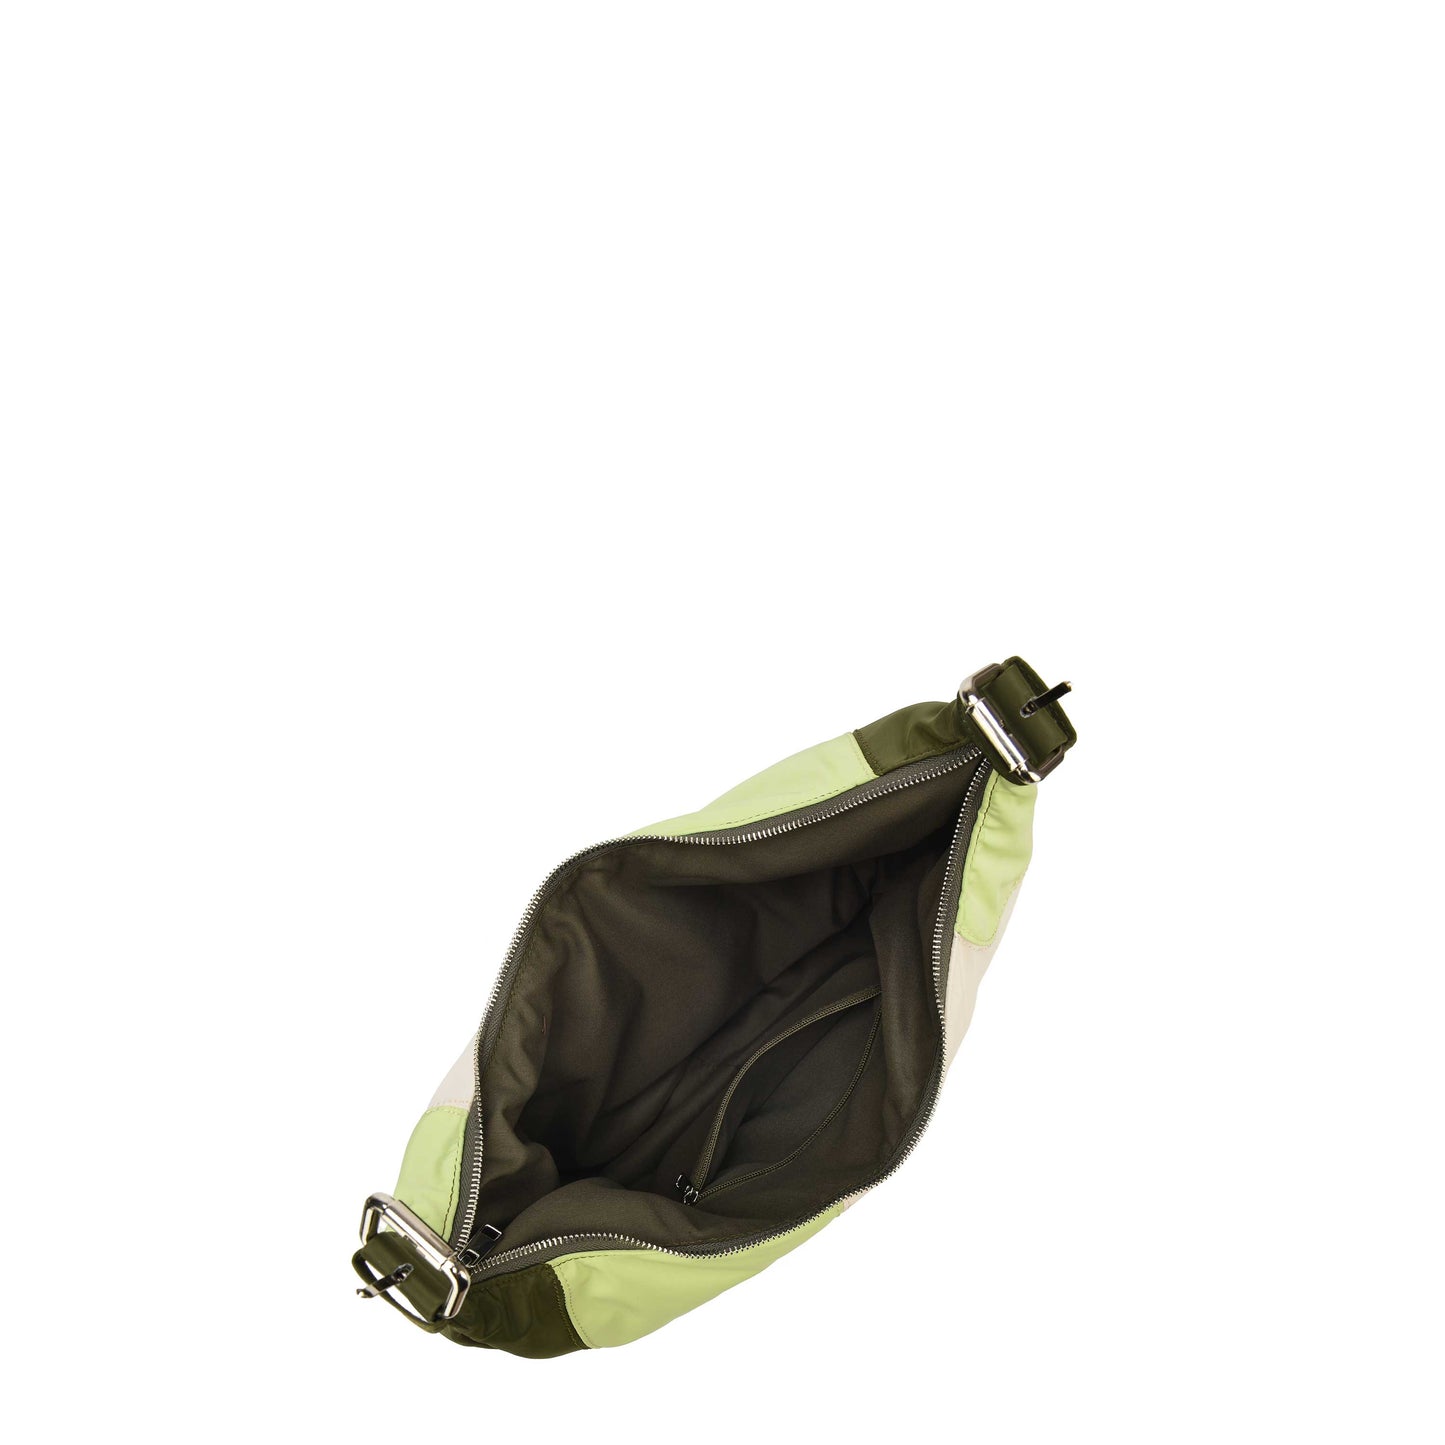 Núnoo Stella Recycled Nylon Mixed Shoulder bags Beige/Green/Dark Green